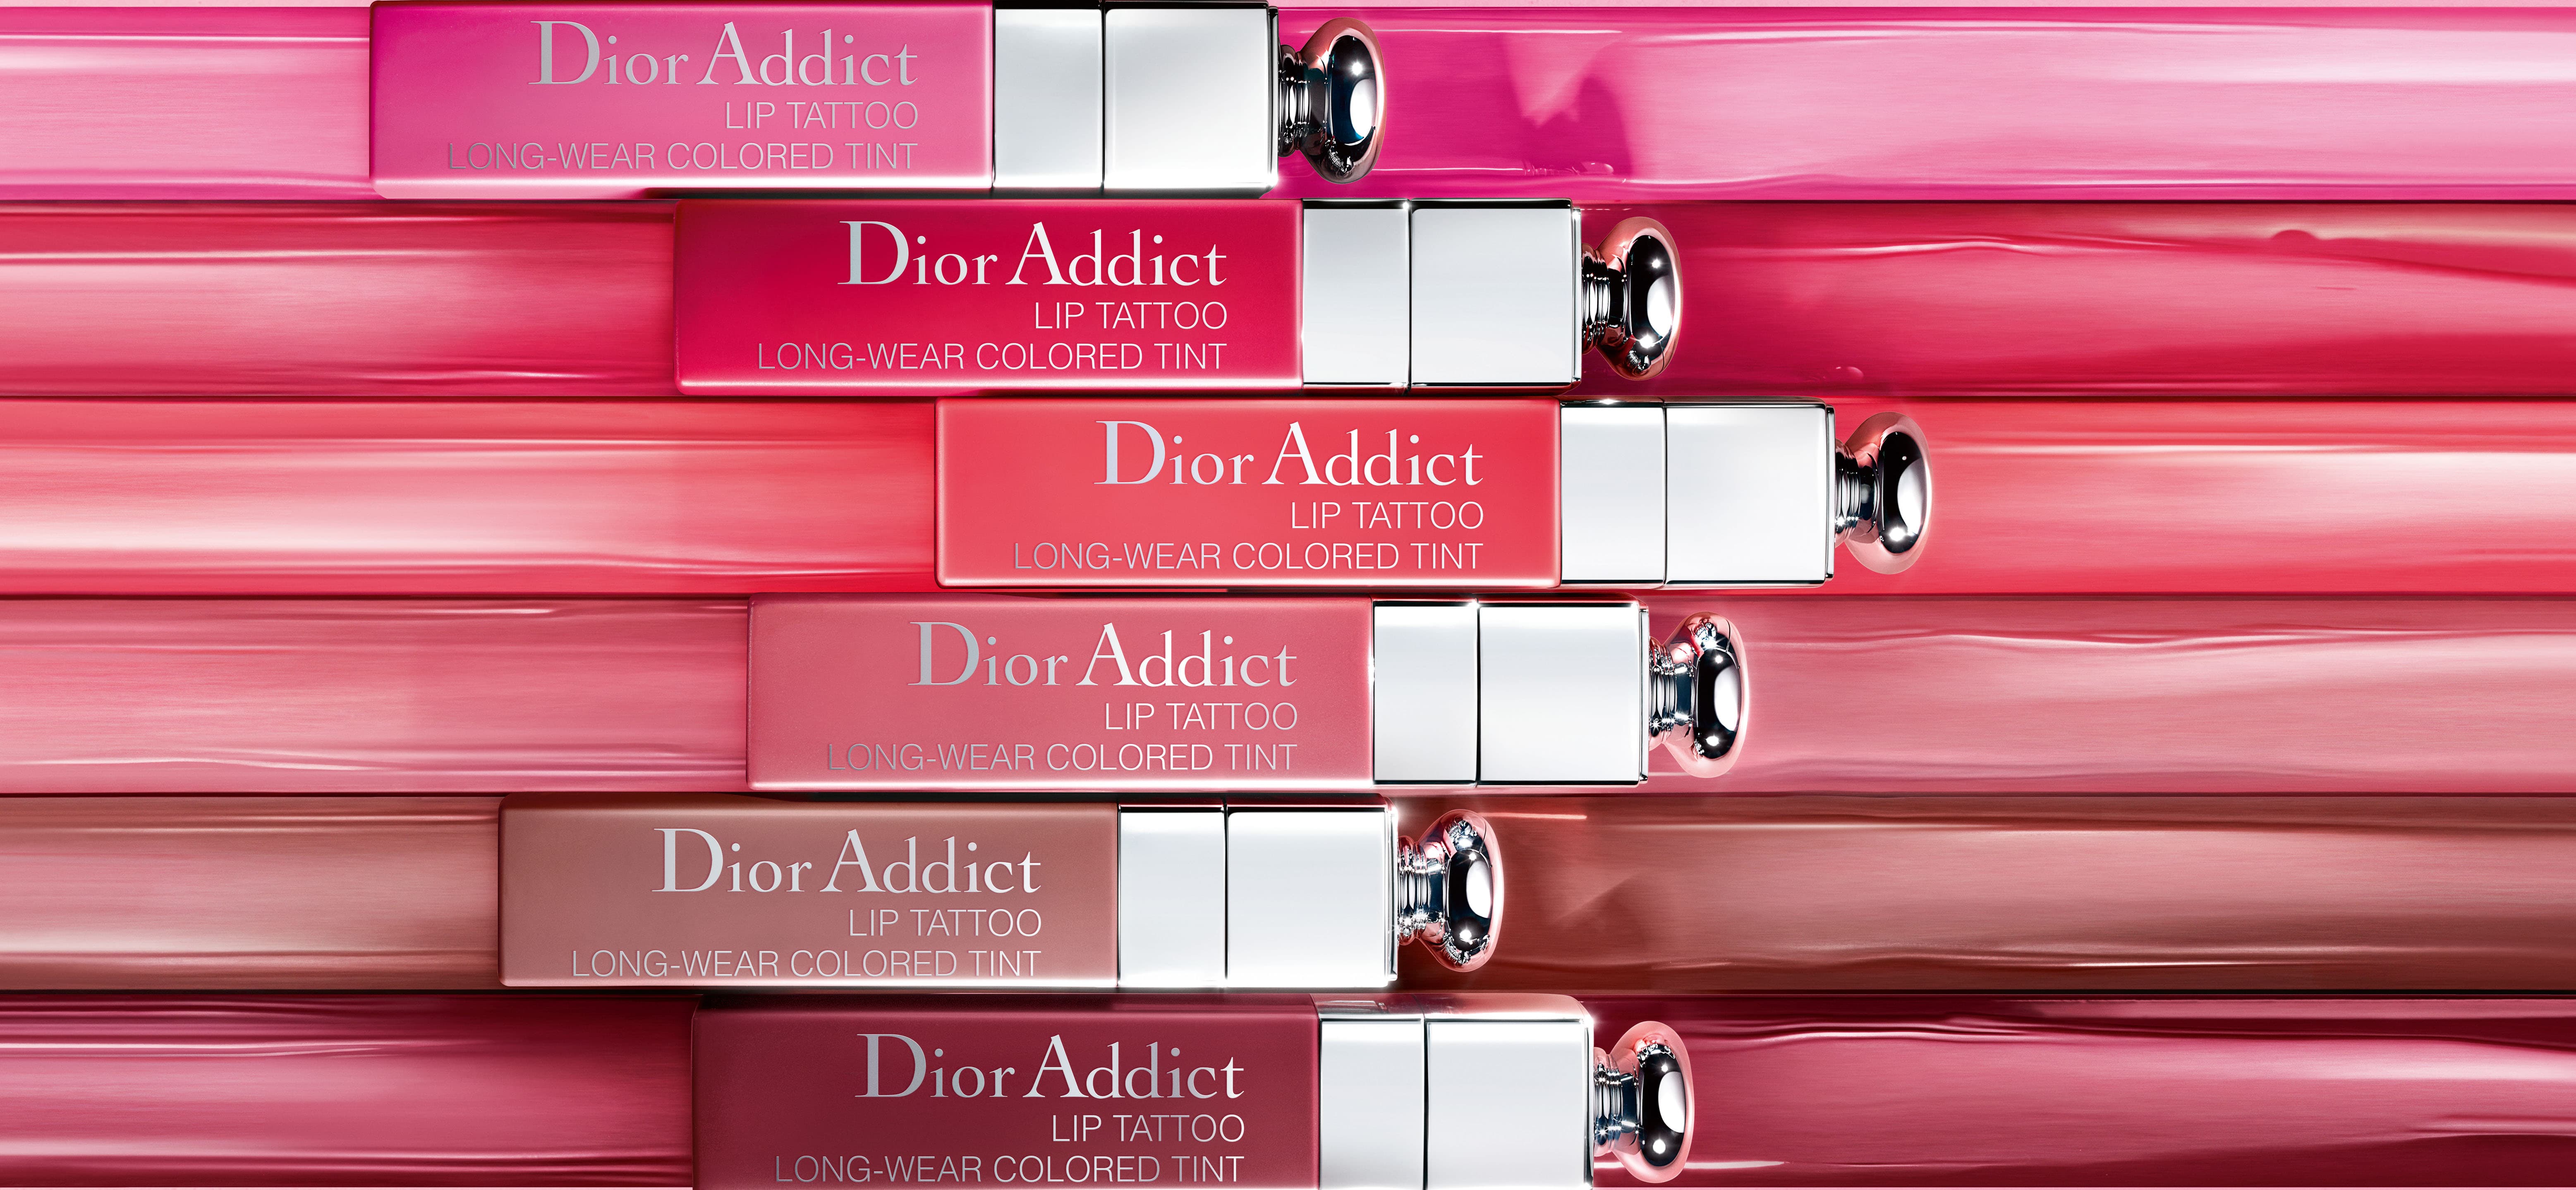 Dior Addict Lip Tattoo long-Wear colored